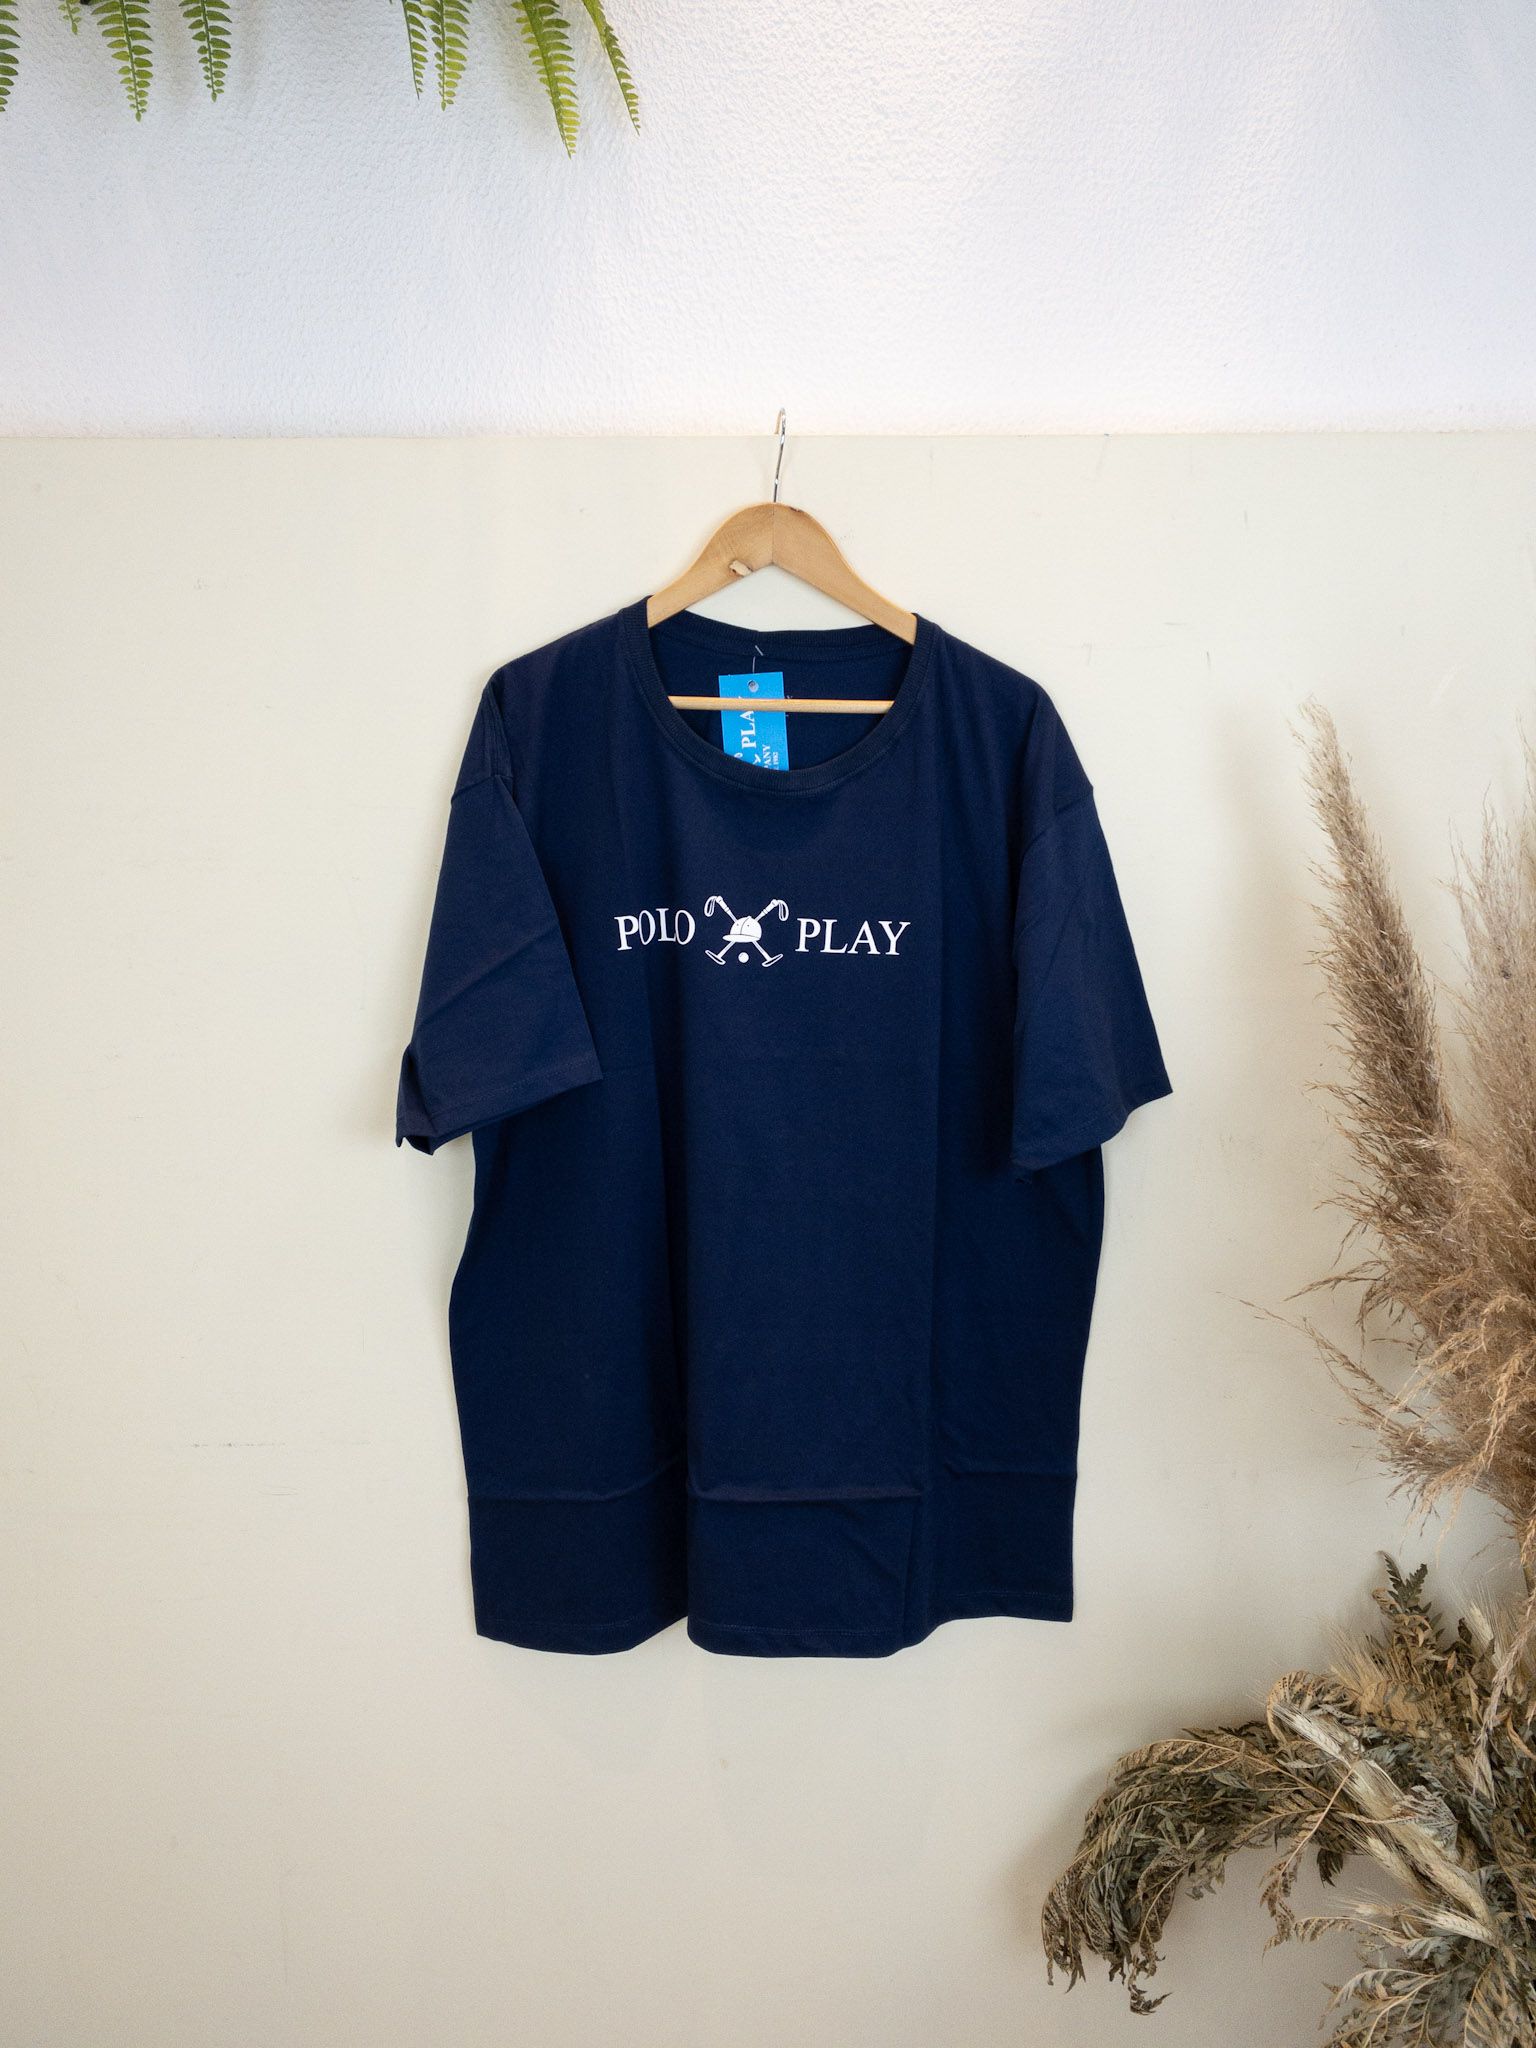 Camiseta Polo Play Azul Marinho - Dona Chica Brechó Online